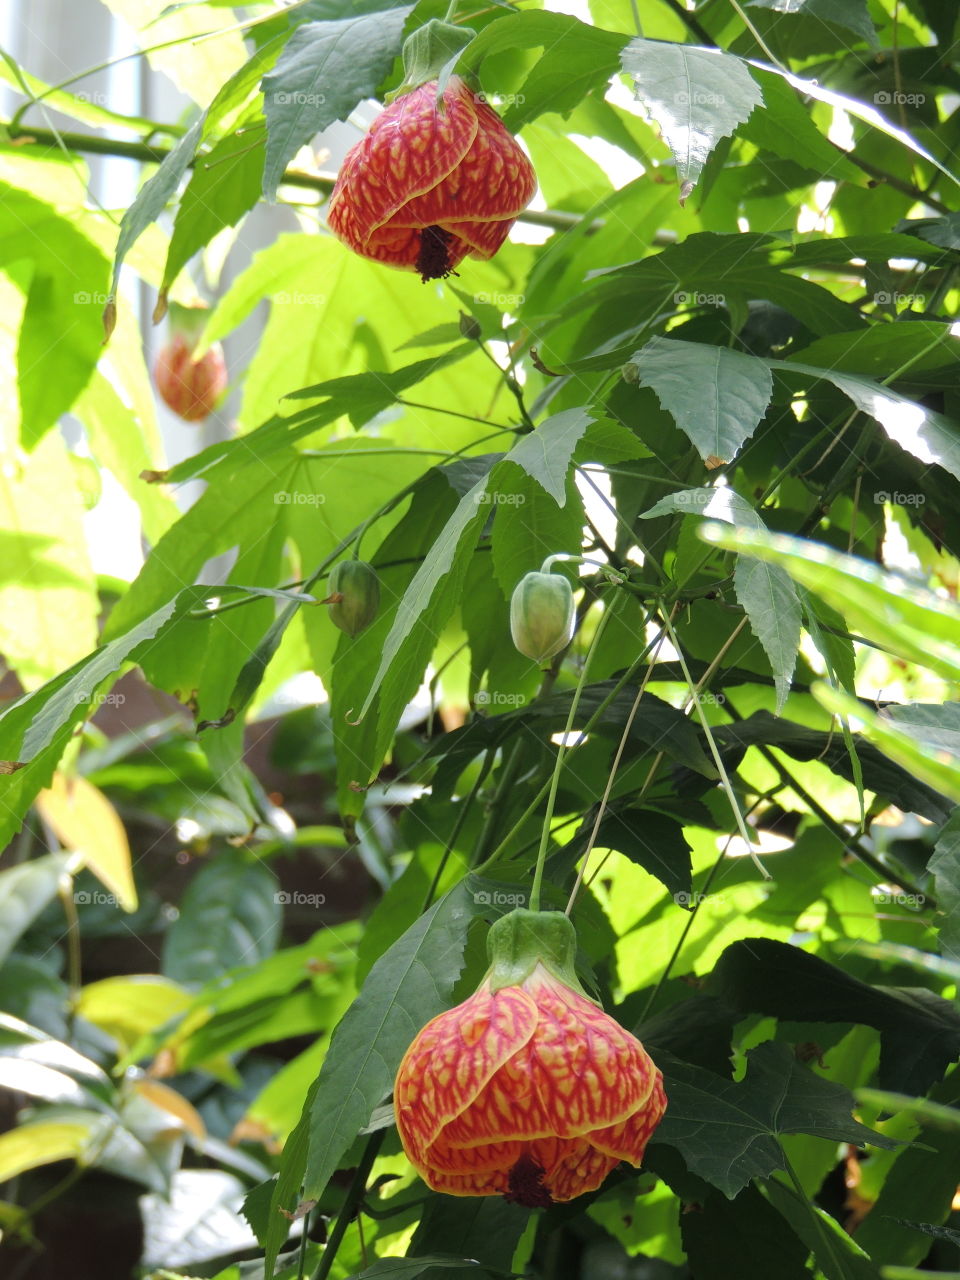 Flowering Maple 'Biltmore Ballgown'